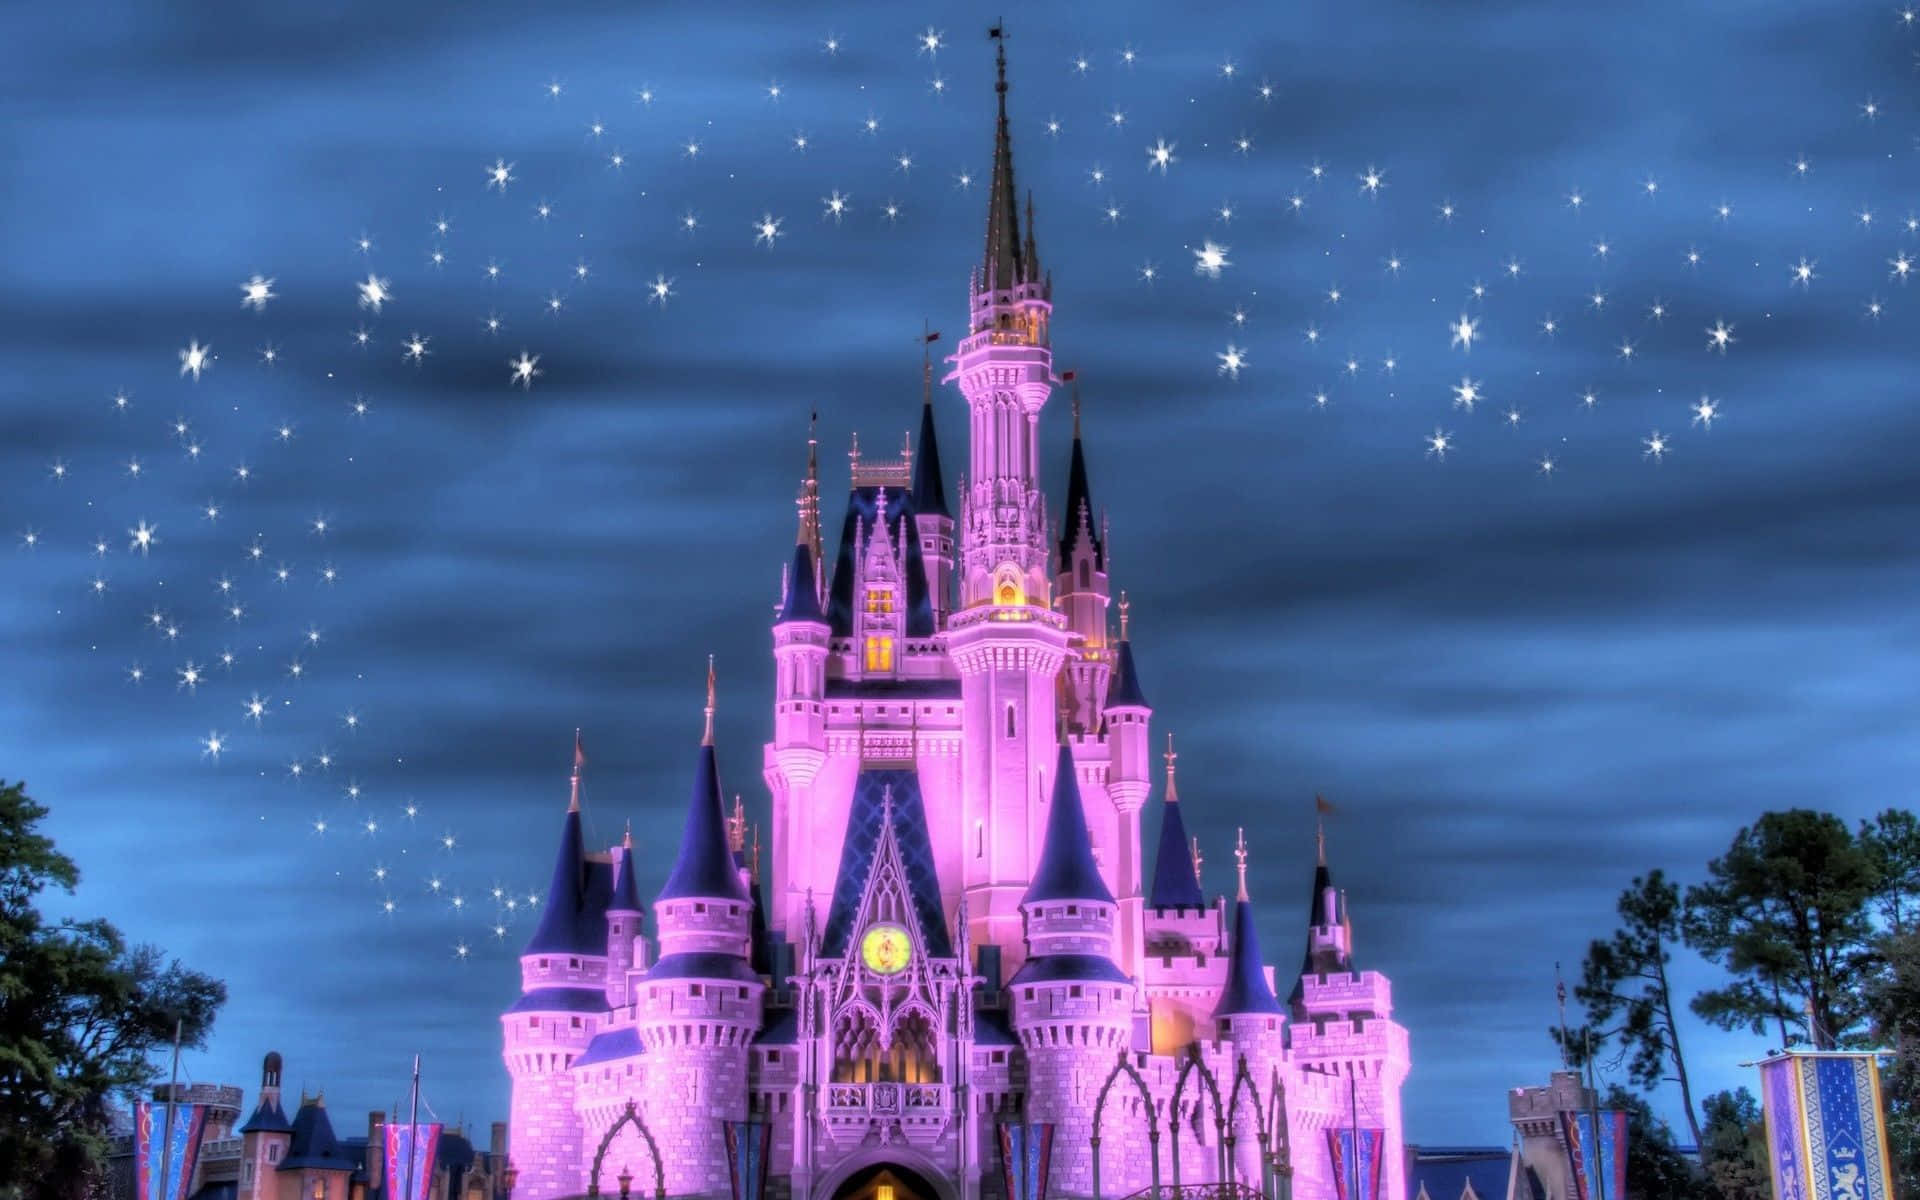 Enchanting Castle Under Fairy-Tale Skies - Aesthetic Disney Wallpaper